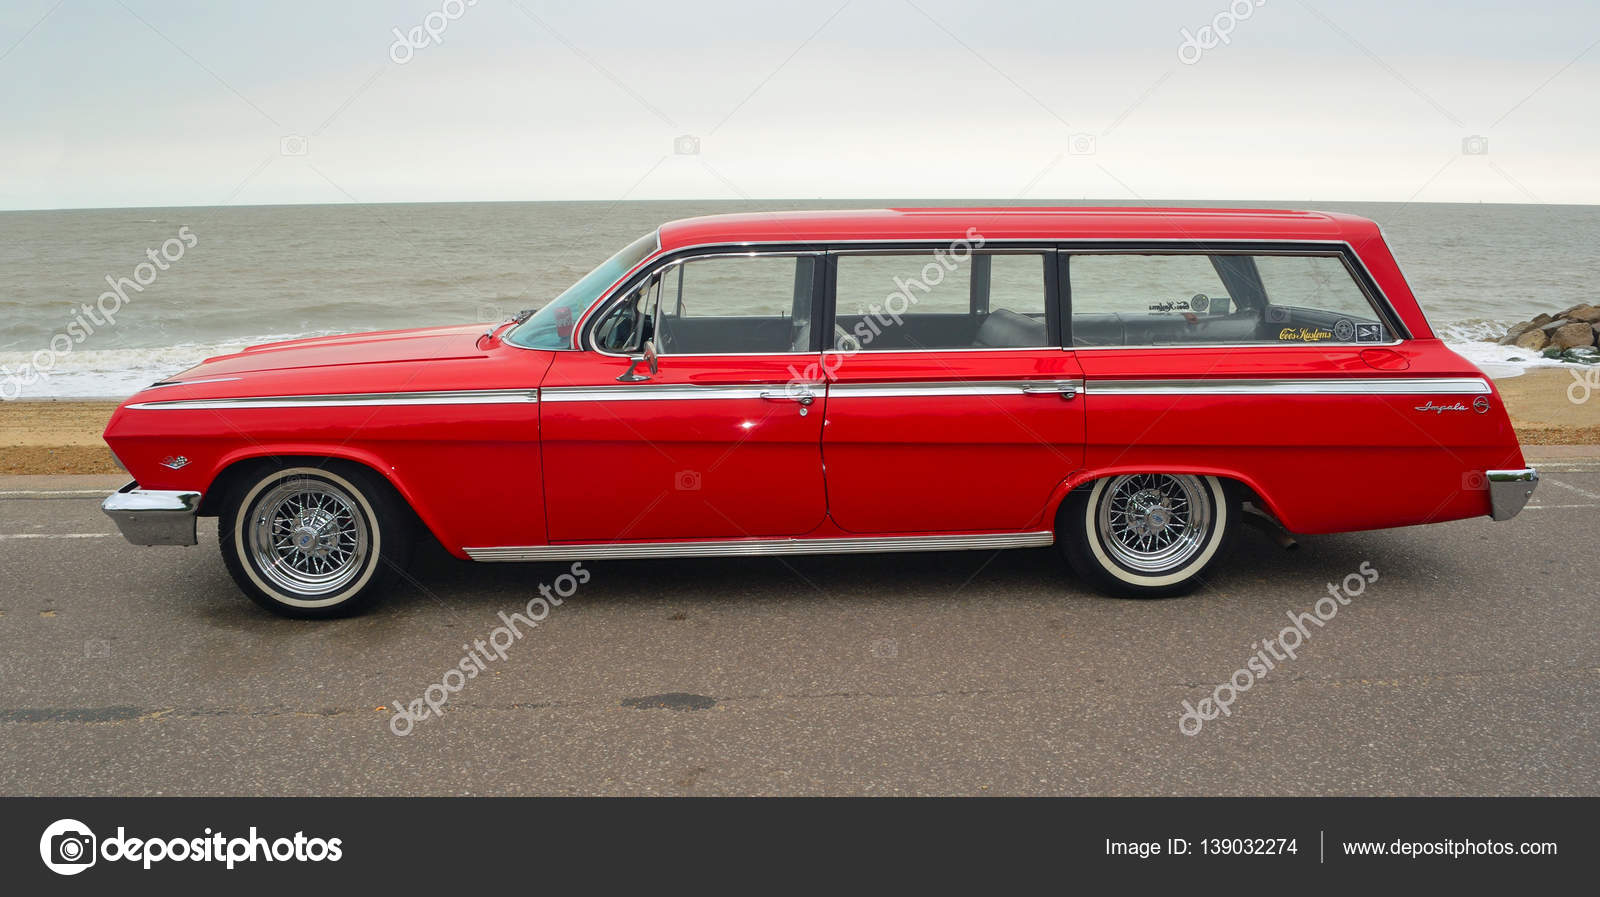 Classic Red Chevrolet Impala Station Wagon Parked On Seafront Promenade Stock Editorial Photo C Umdash9